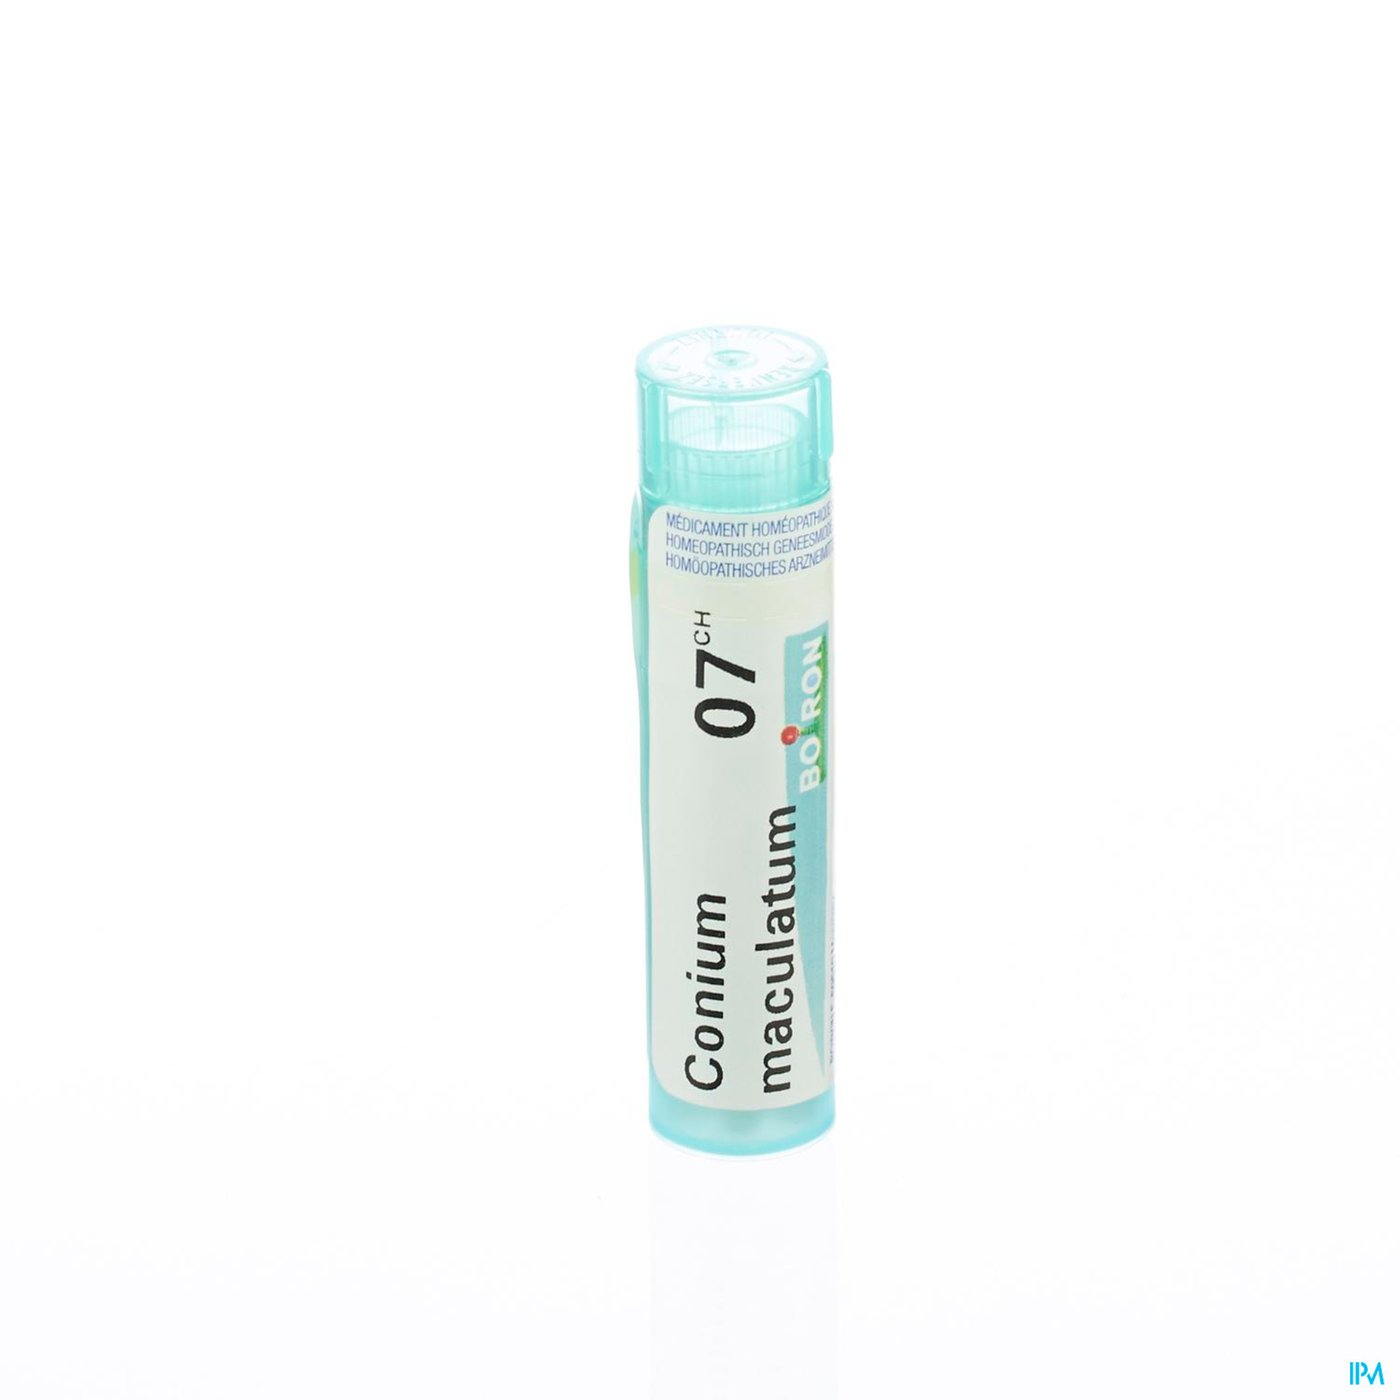 Conium Maculatum 7ch Gr 4g Boiron packshot